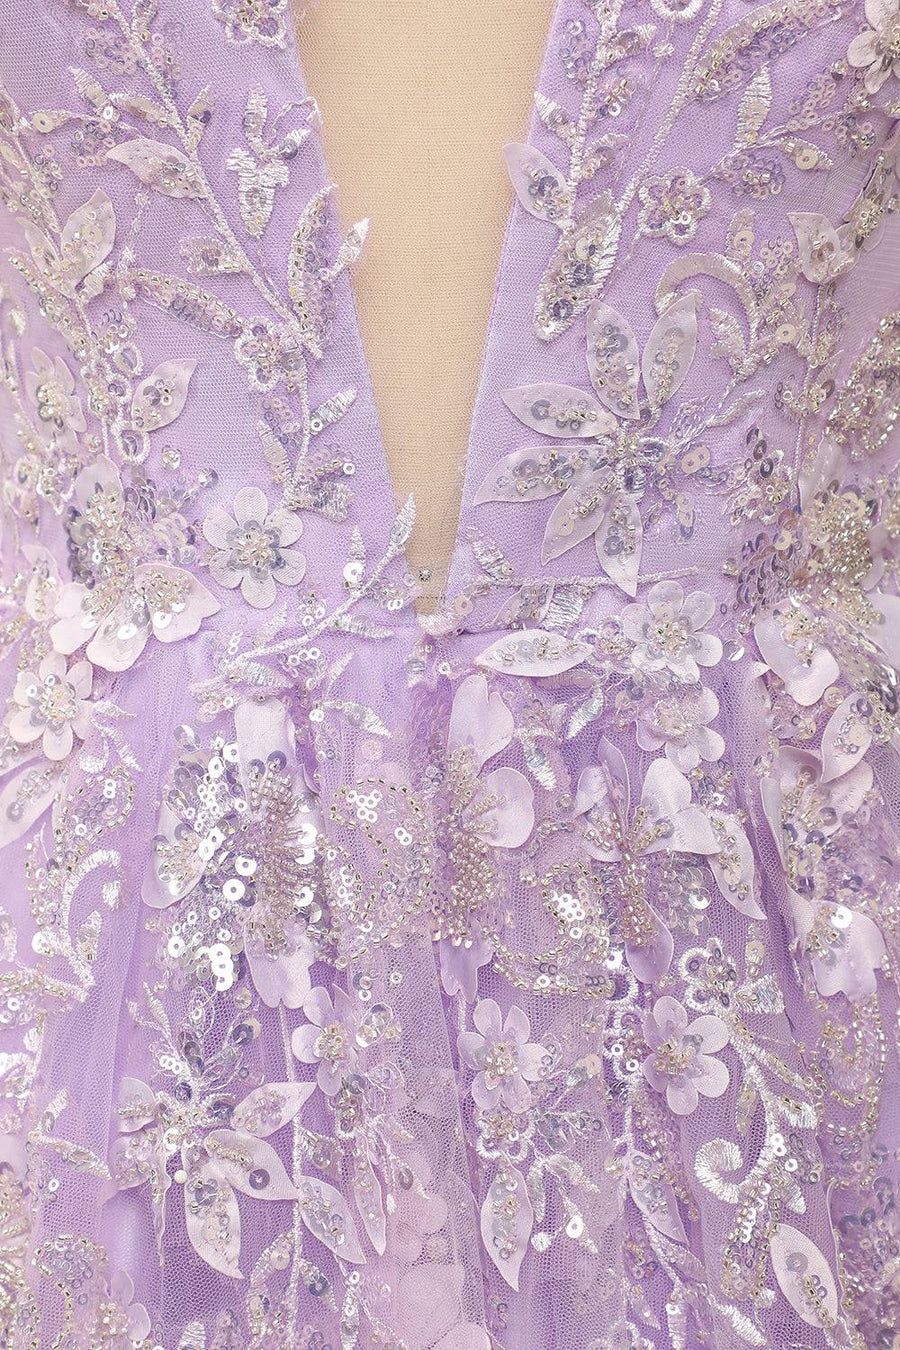 Lilac A-line V Neck Tulle Applique Lace-Up Back Long Prom Dress